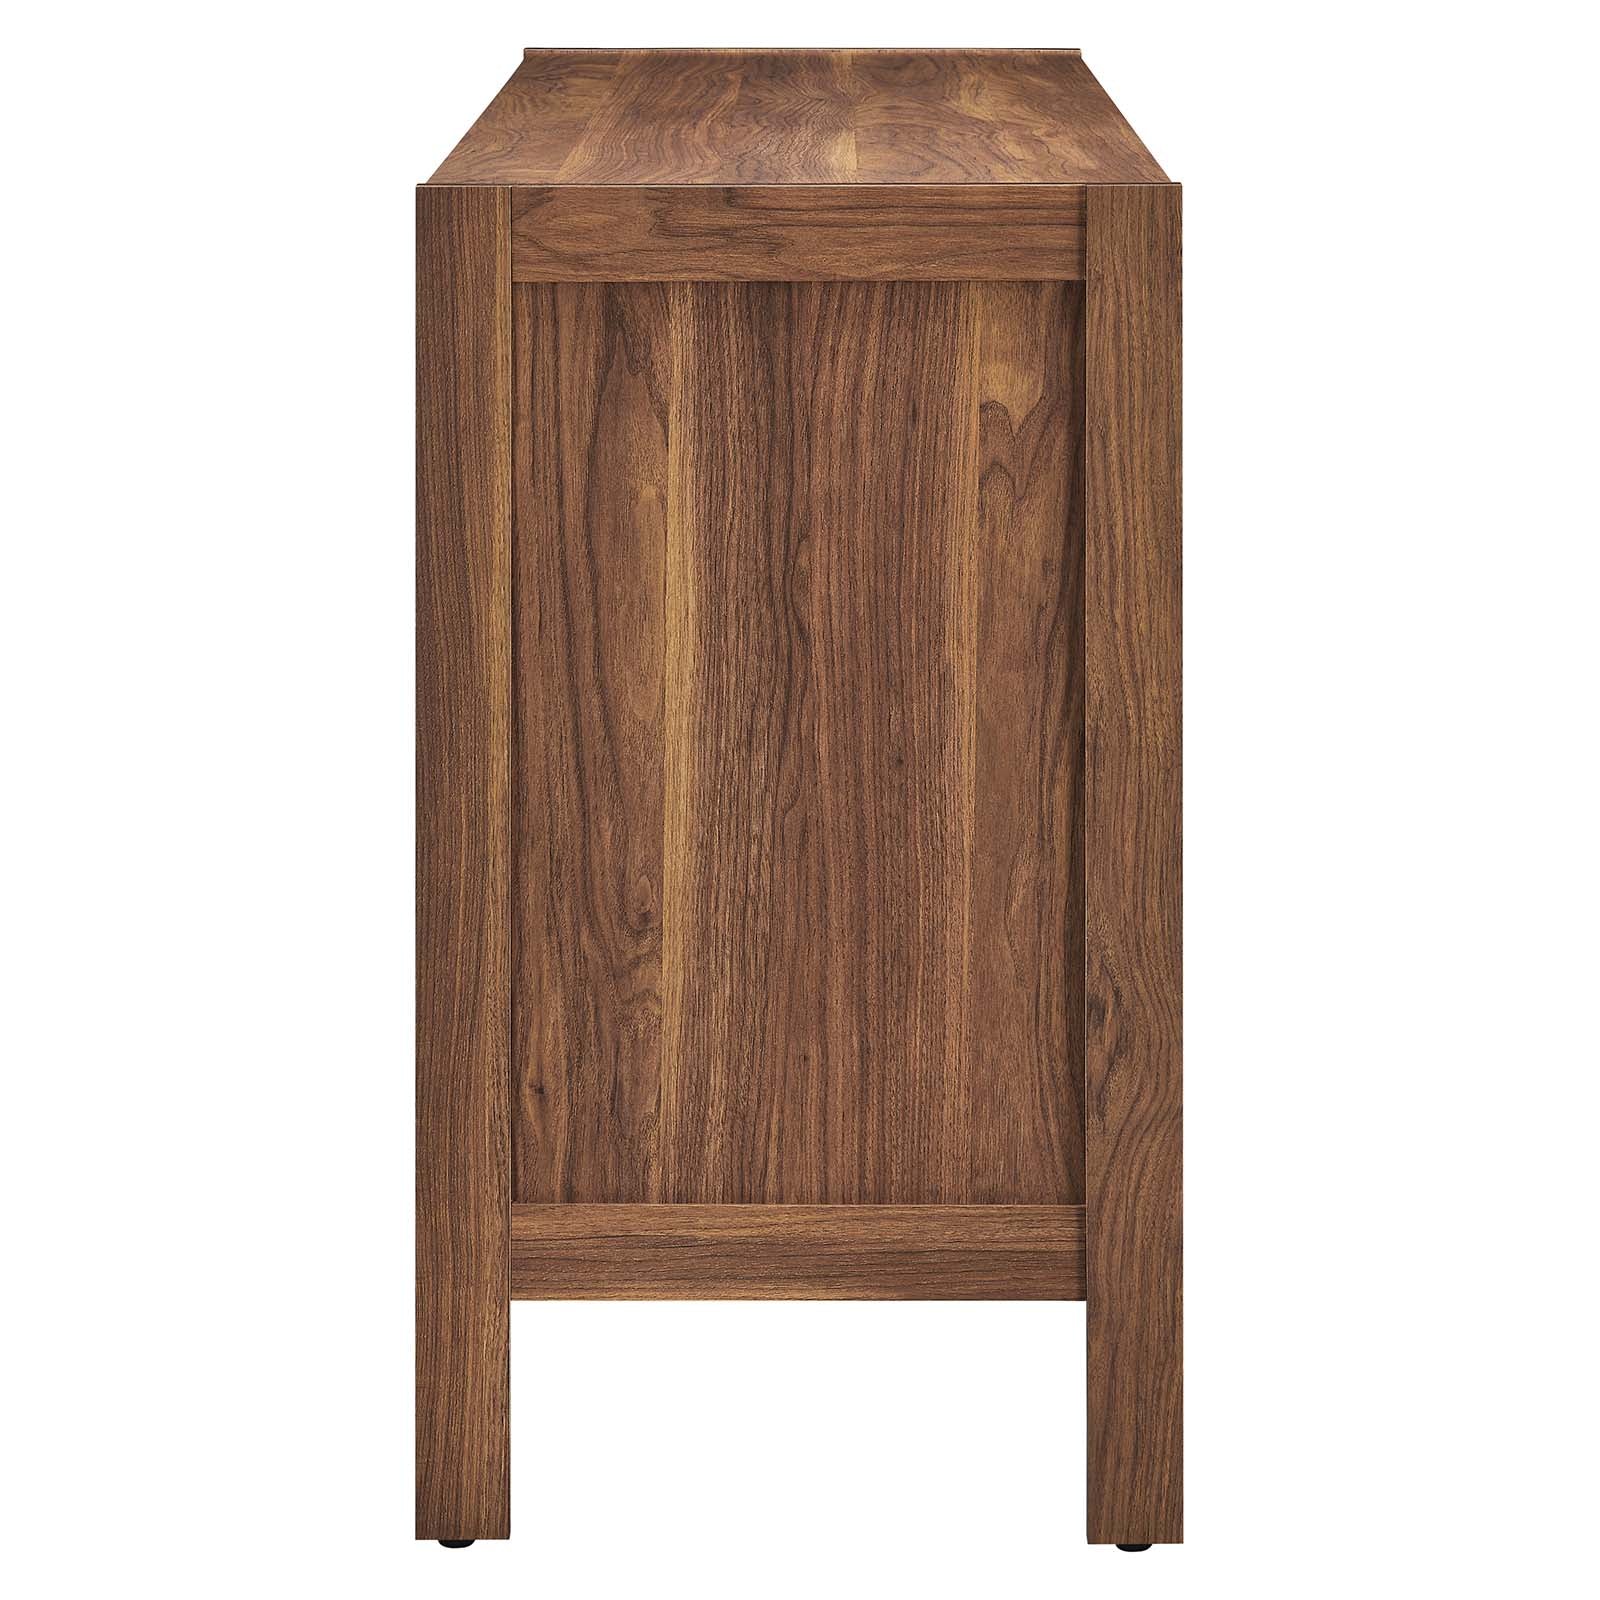 Capri 65" Wood Grain Sideboard Storage Cabinet - East Shore Modern Home Furnishings